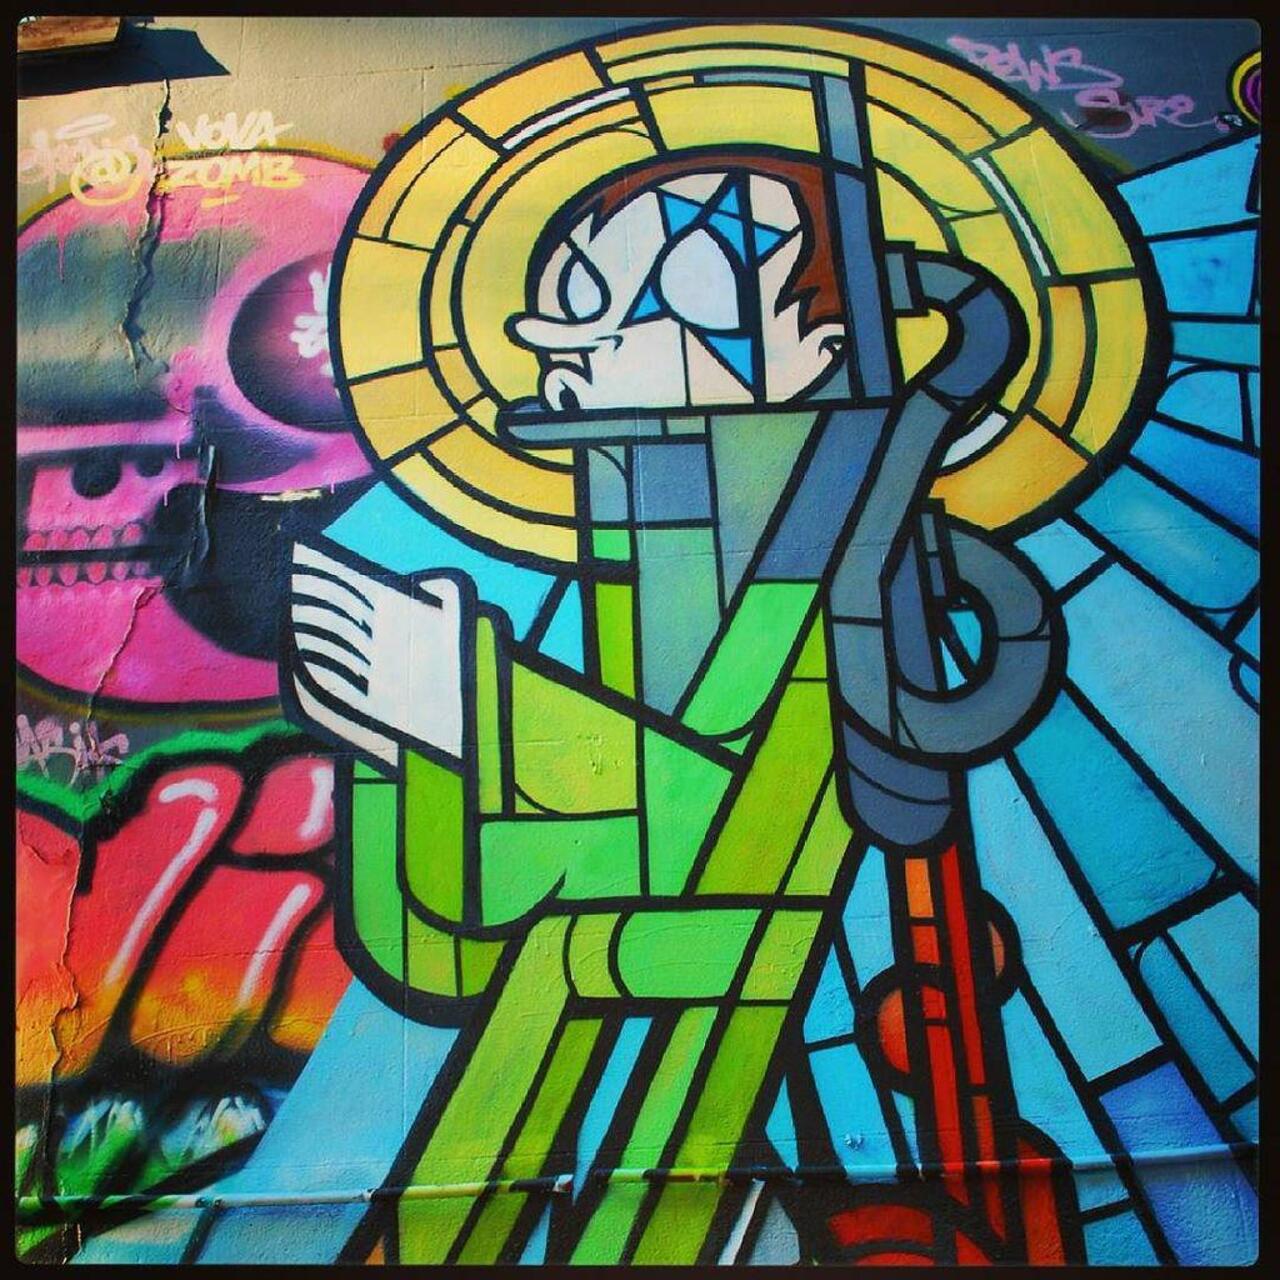 RT @StArtEverywhere: Art by Vova Zomb  
#Graffiti #StreetArt #UrbanArt #VovaZomb #StarYard #BrickLane #Shoreditch #London #Nikon #Nikon… http://t.co/VM9oI7JwpX